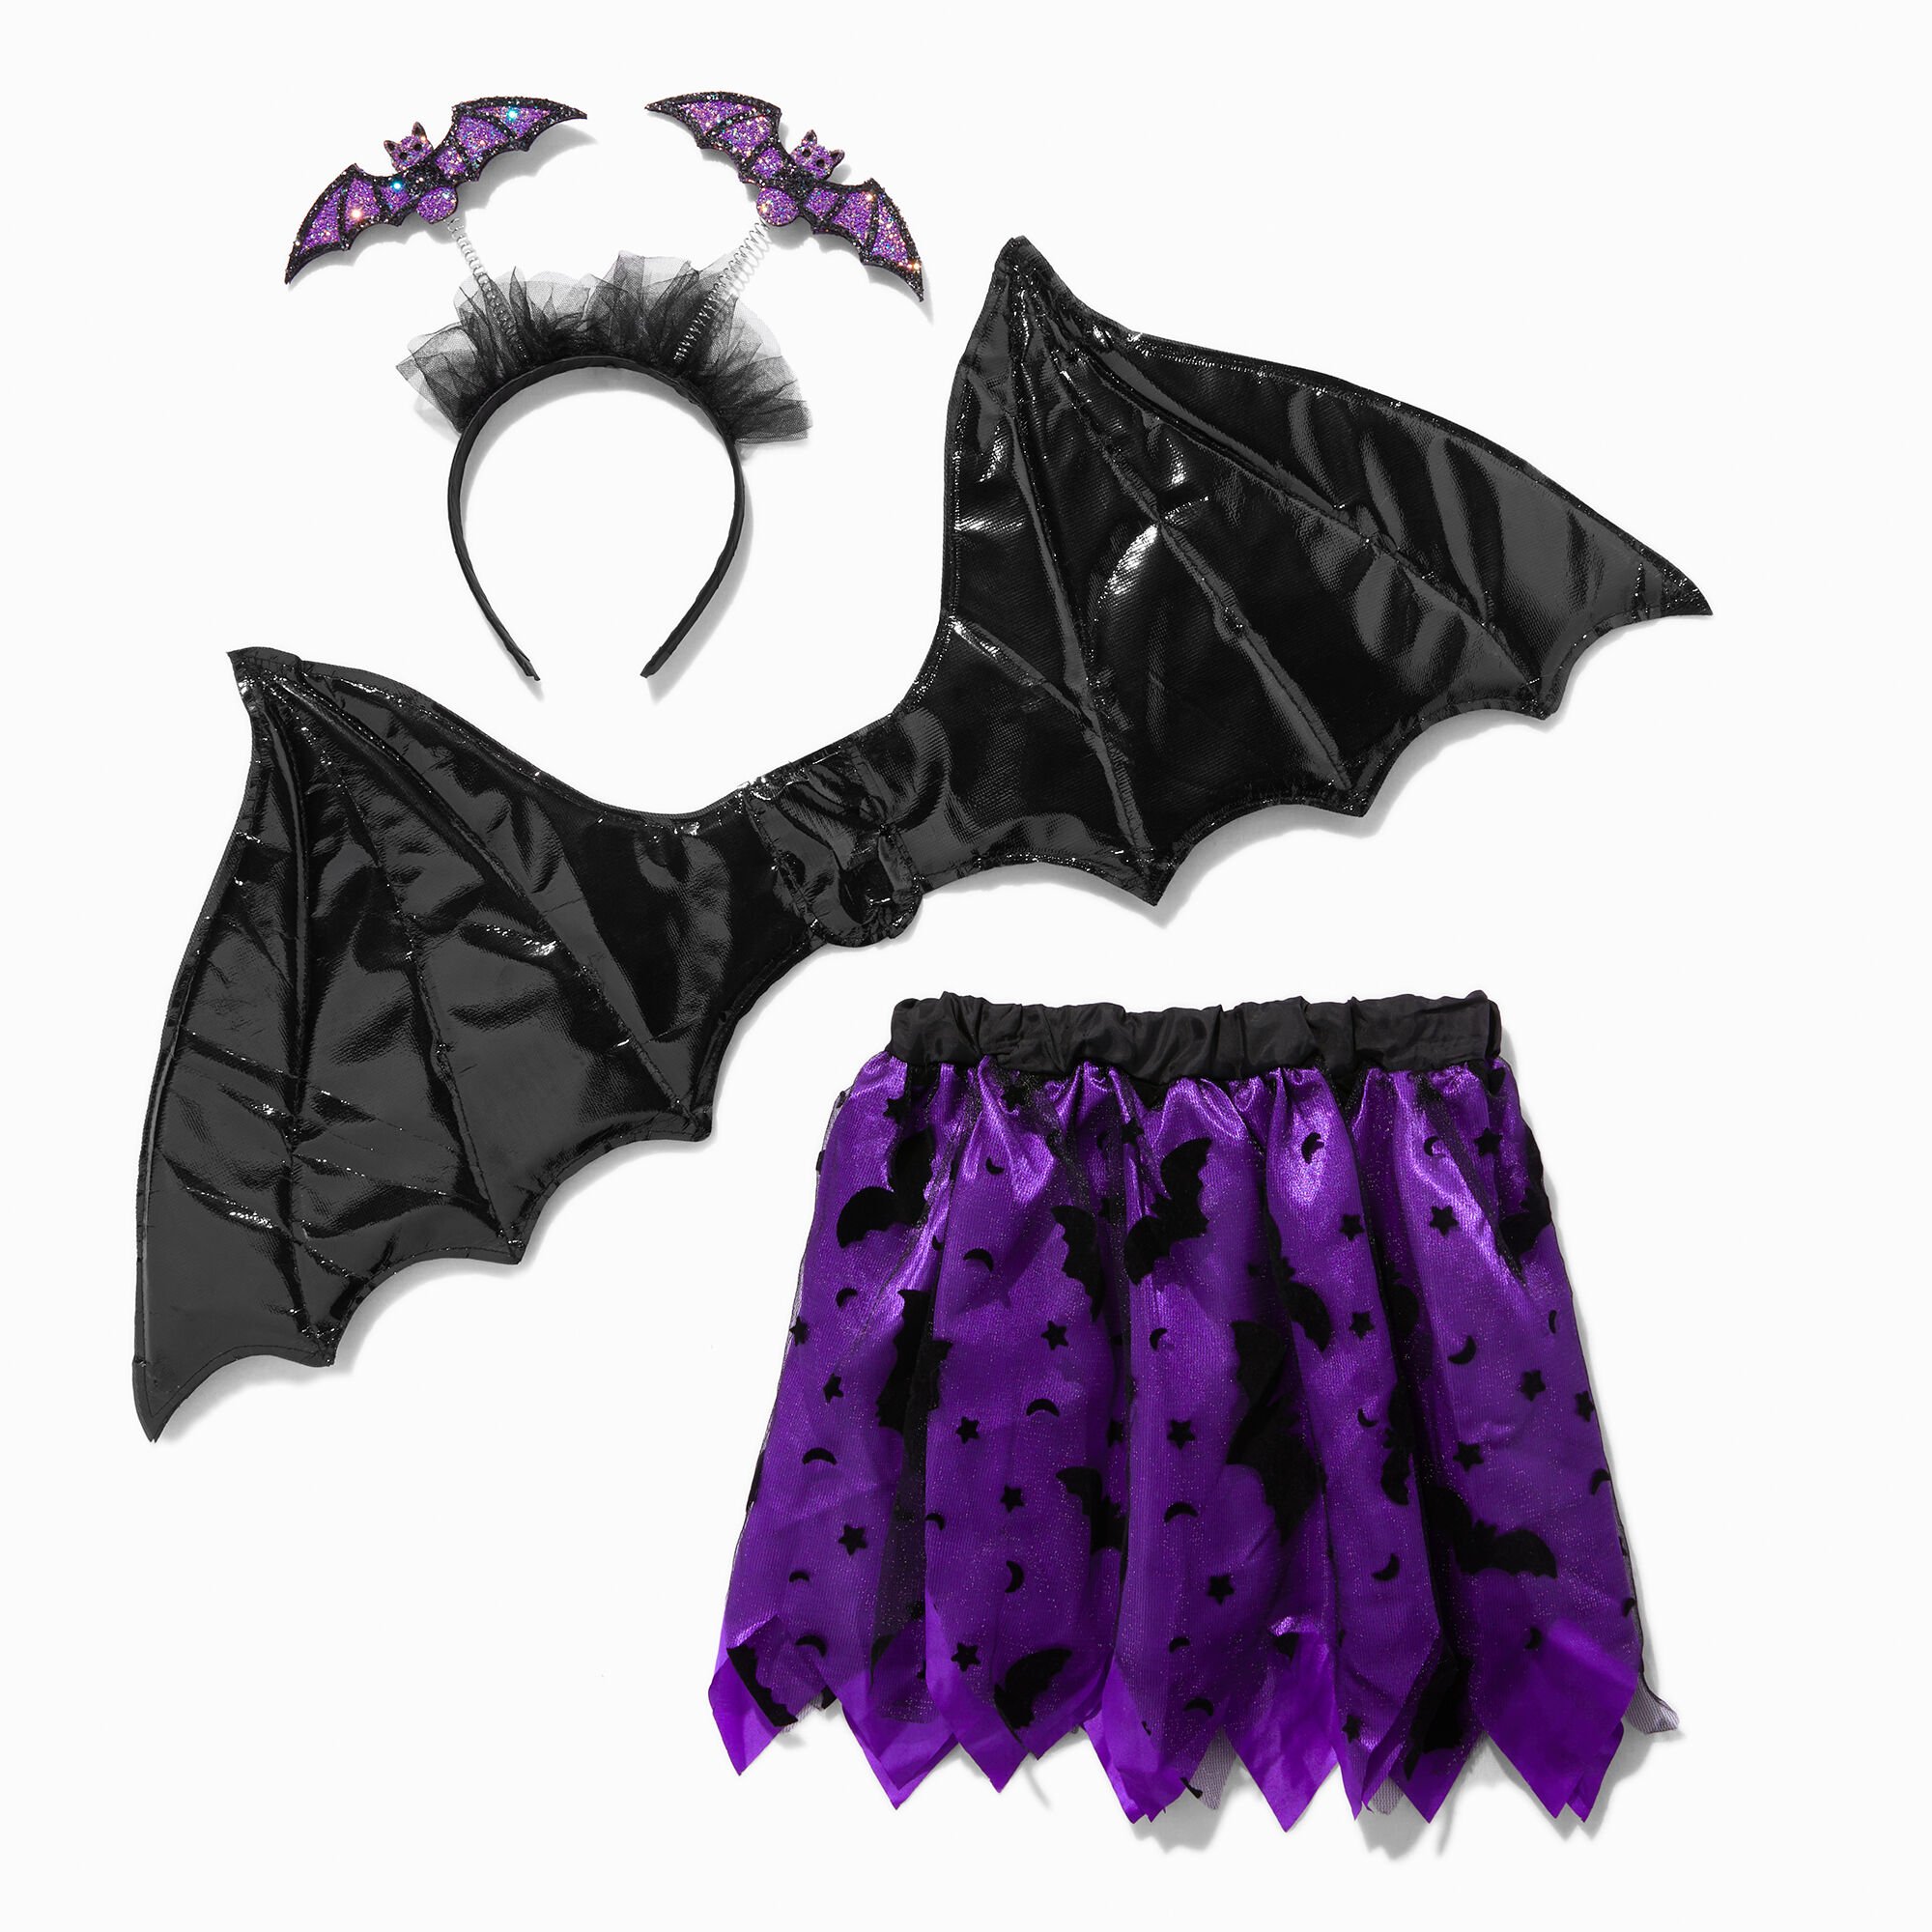 View Claires Purple Bat Youth Dress Up Set 3 Pack Black information